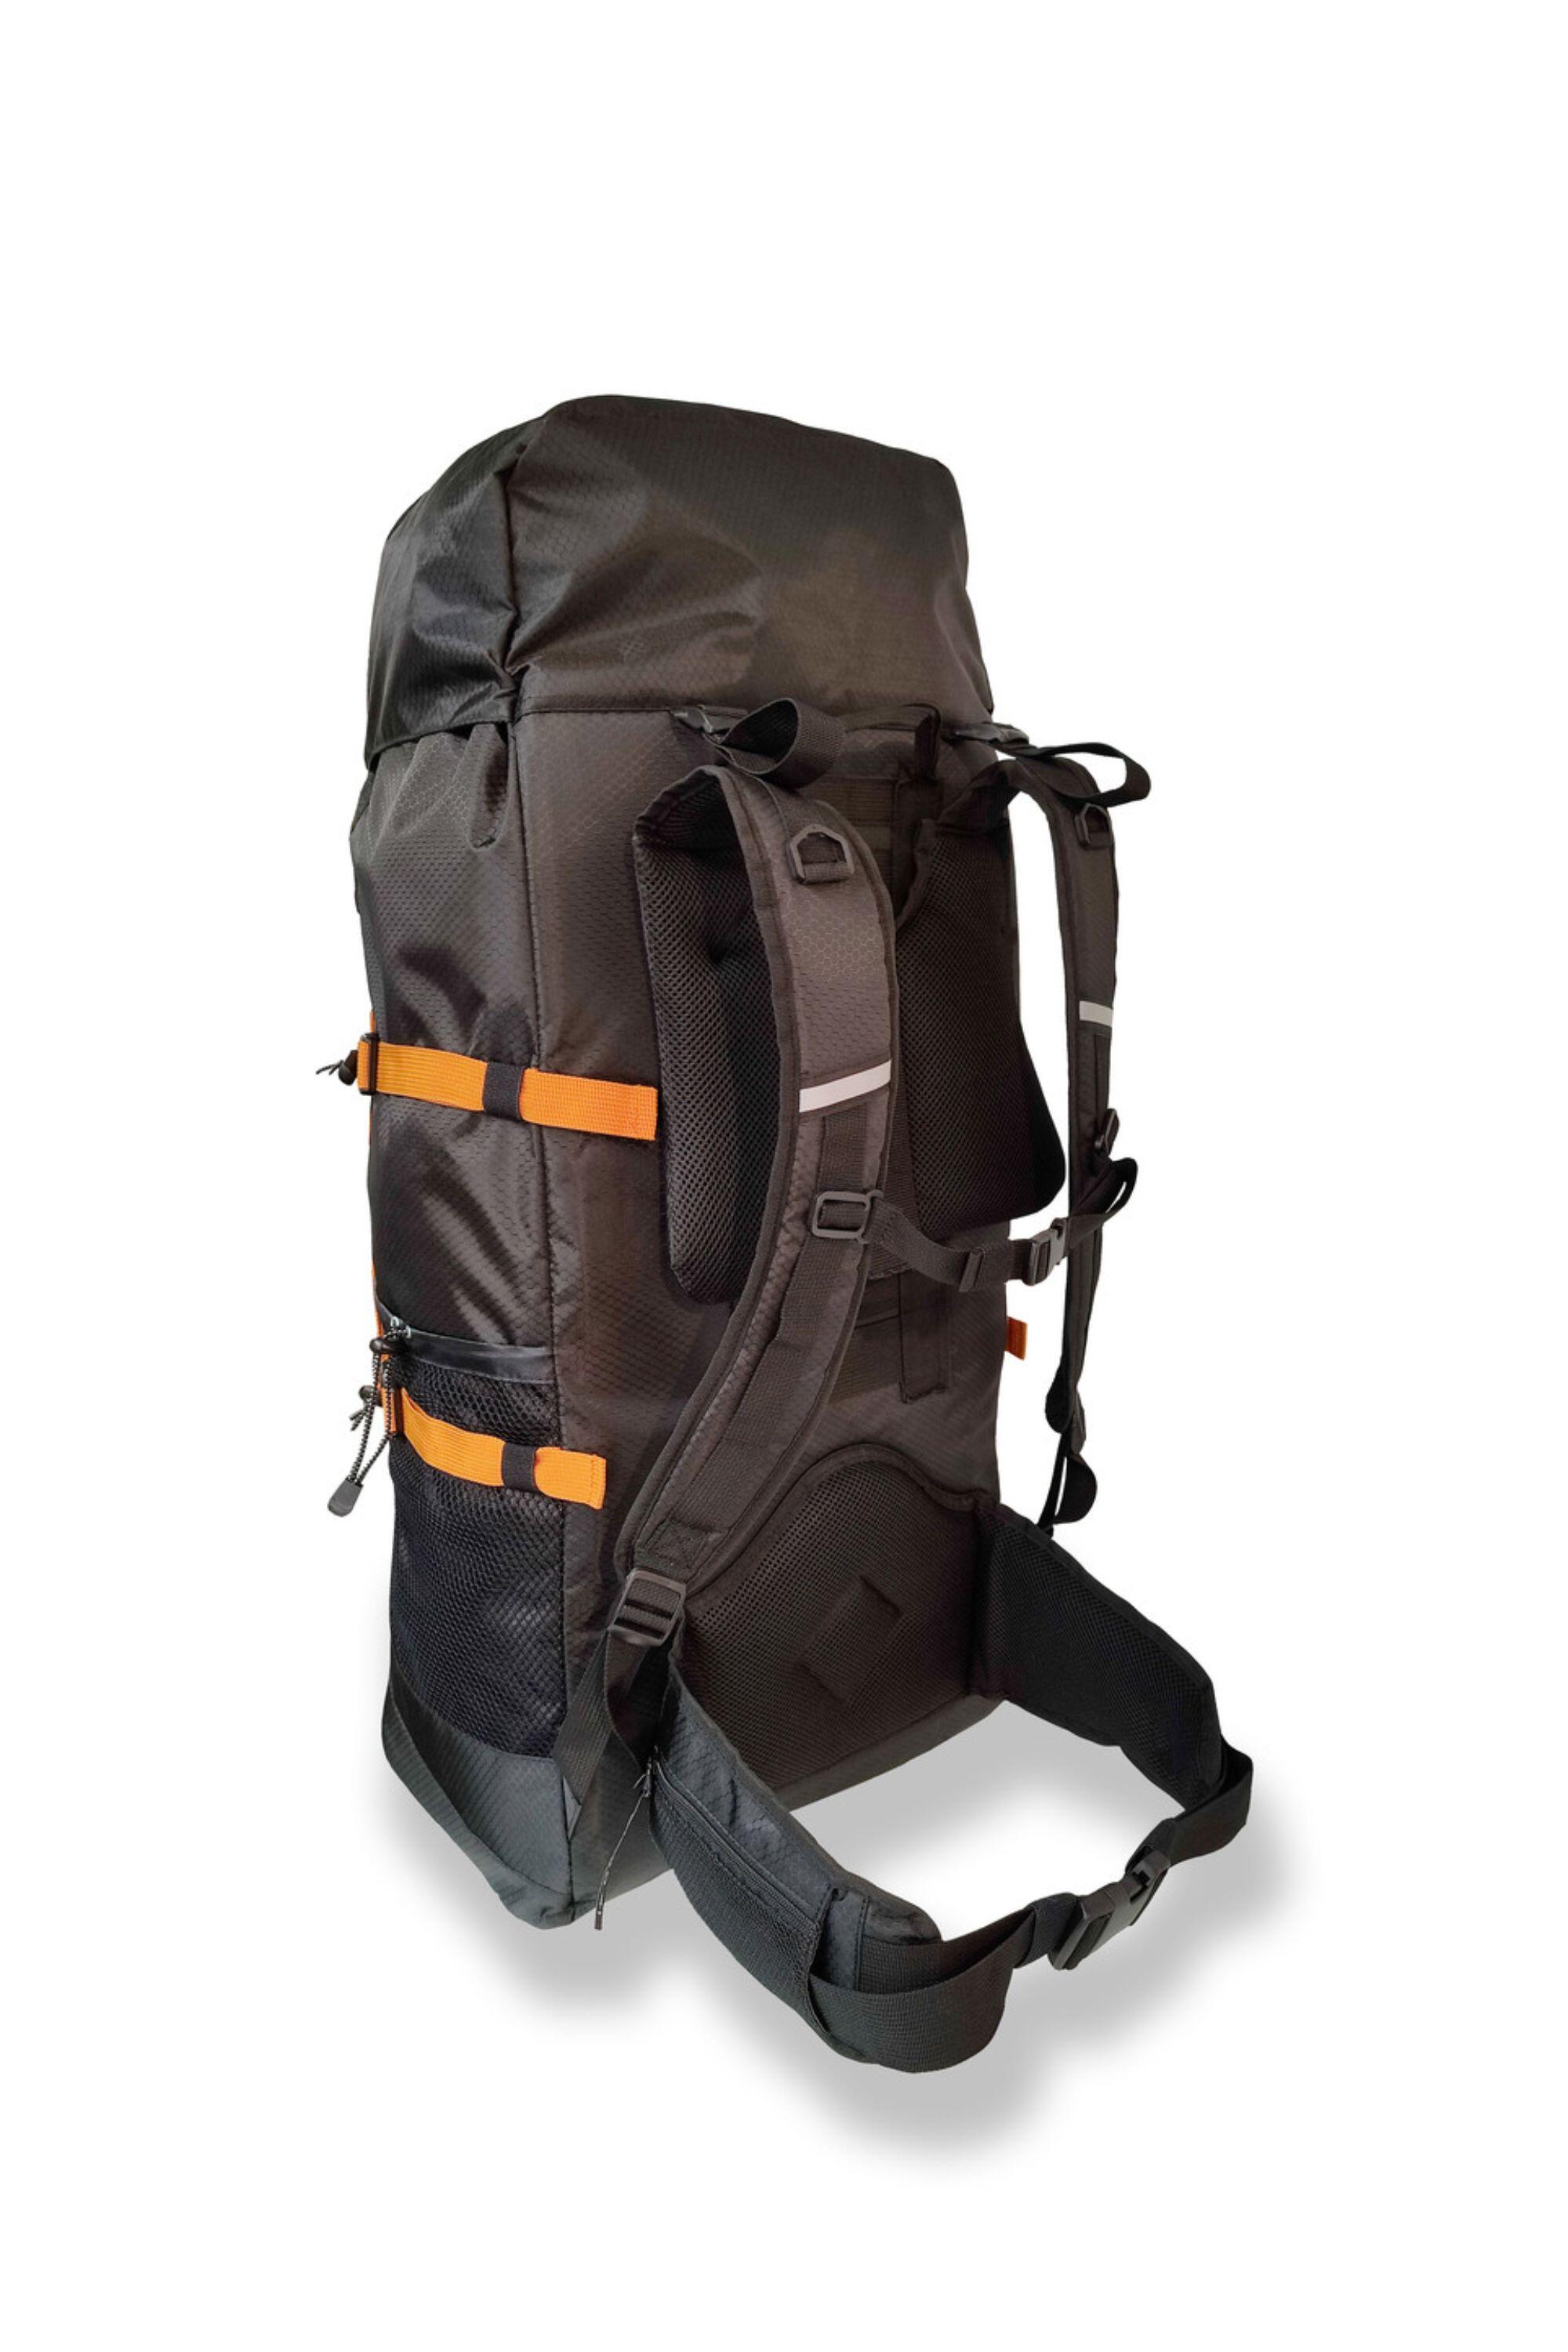 OLPRO 65L Rucksack Bag Black 2/4